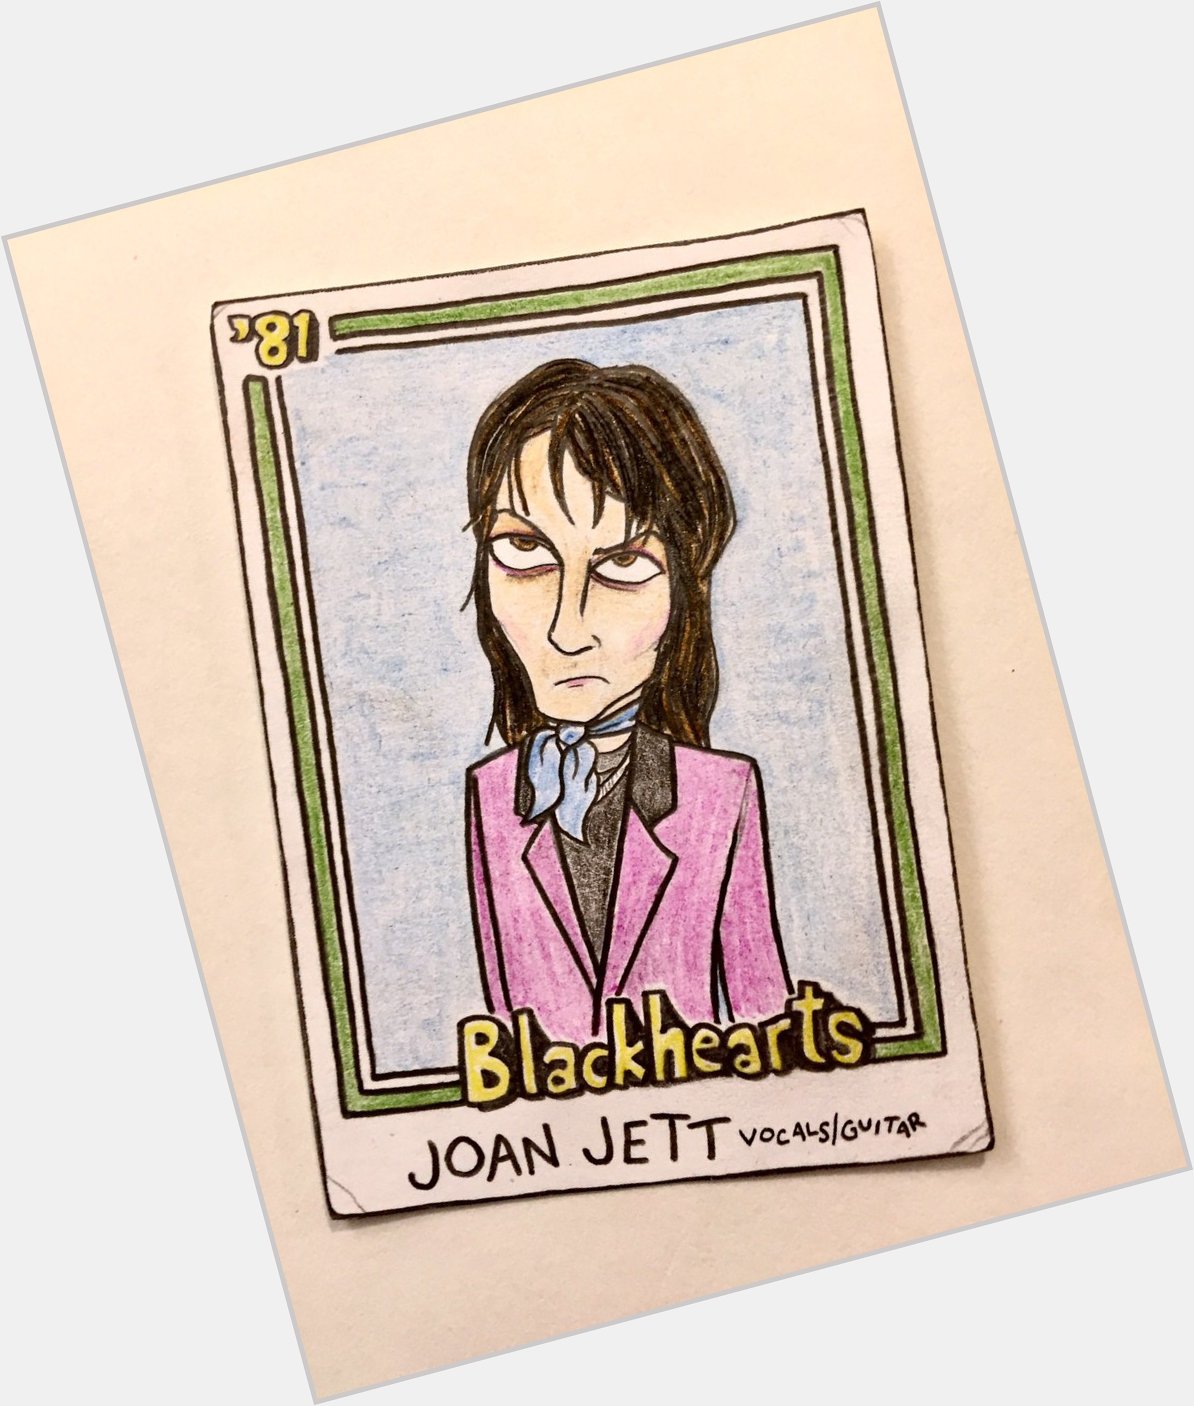 Wishing a very happy birthday to Joan Jett! 